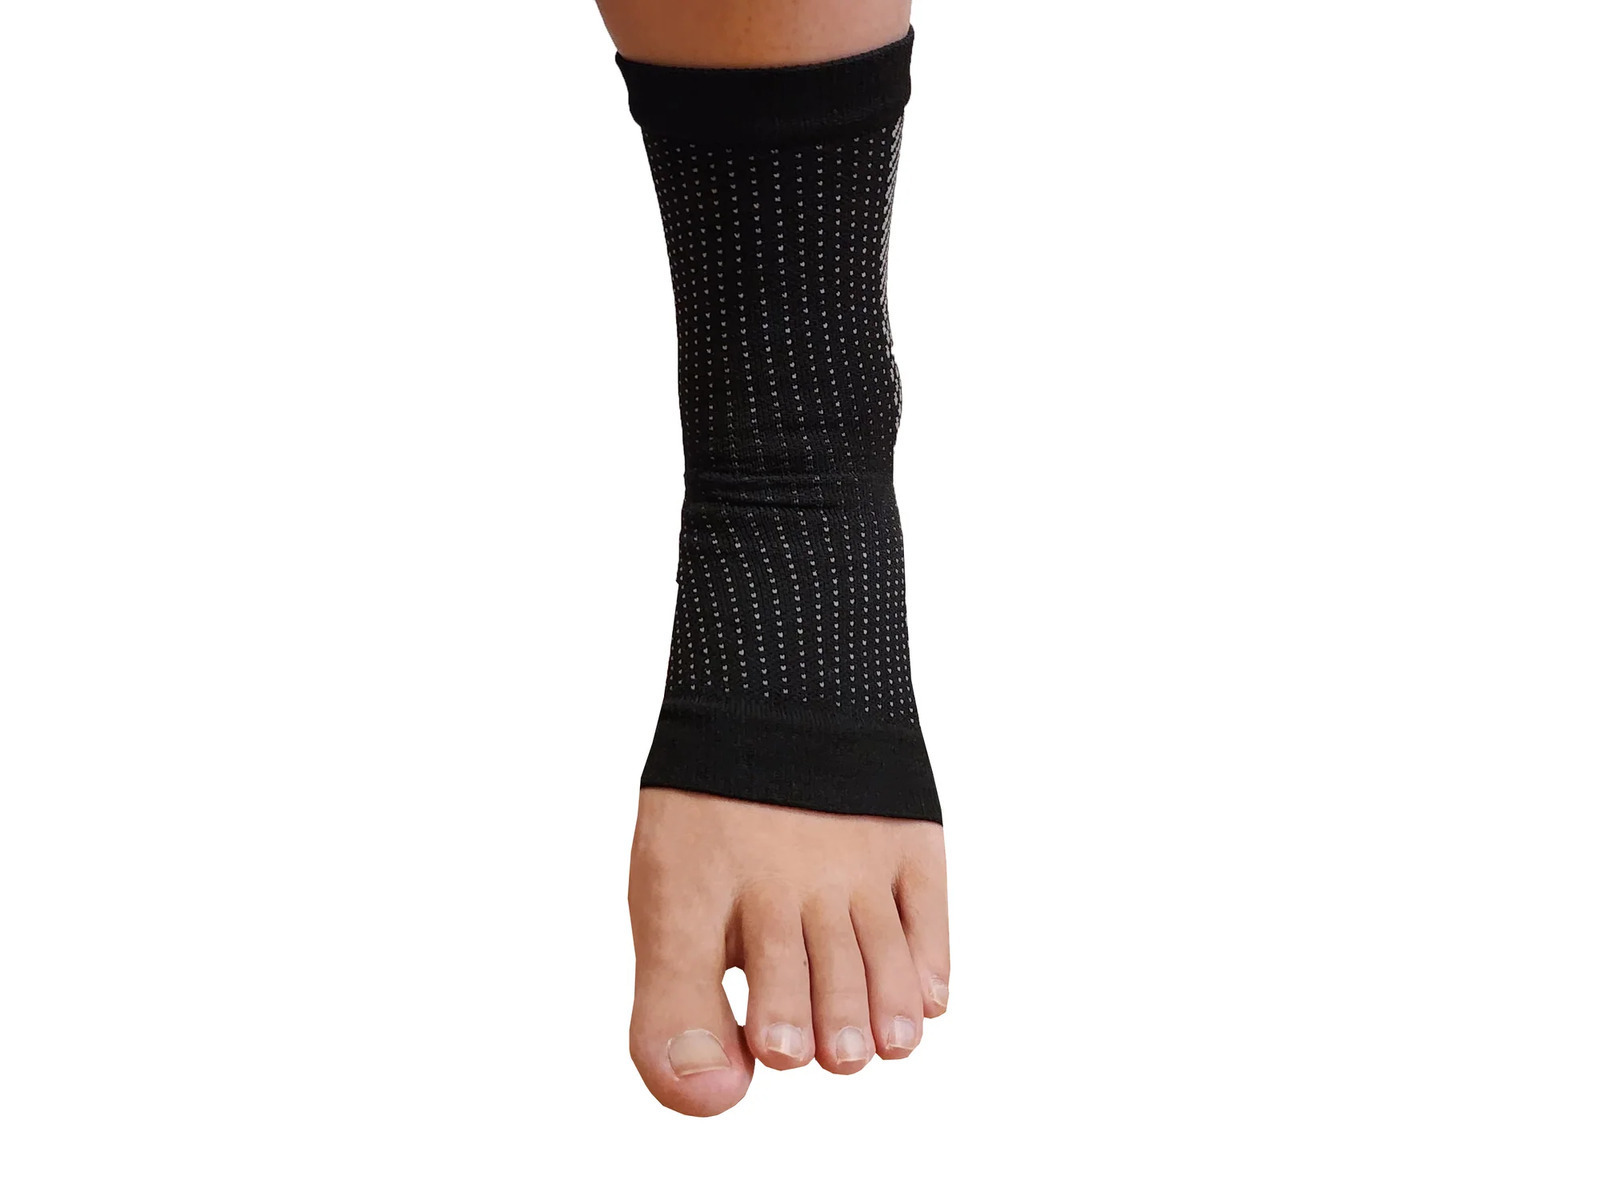 AXIGN Medical Plantar Fasciitis Compression Sock Sleeve Black Axign